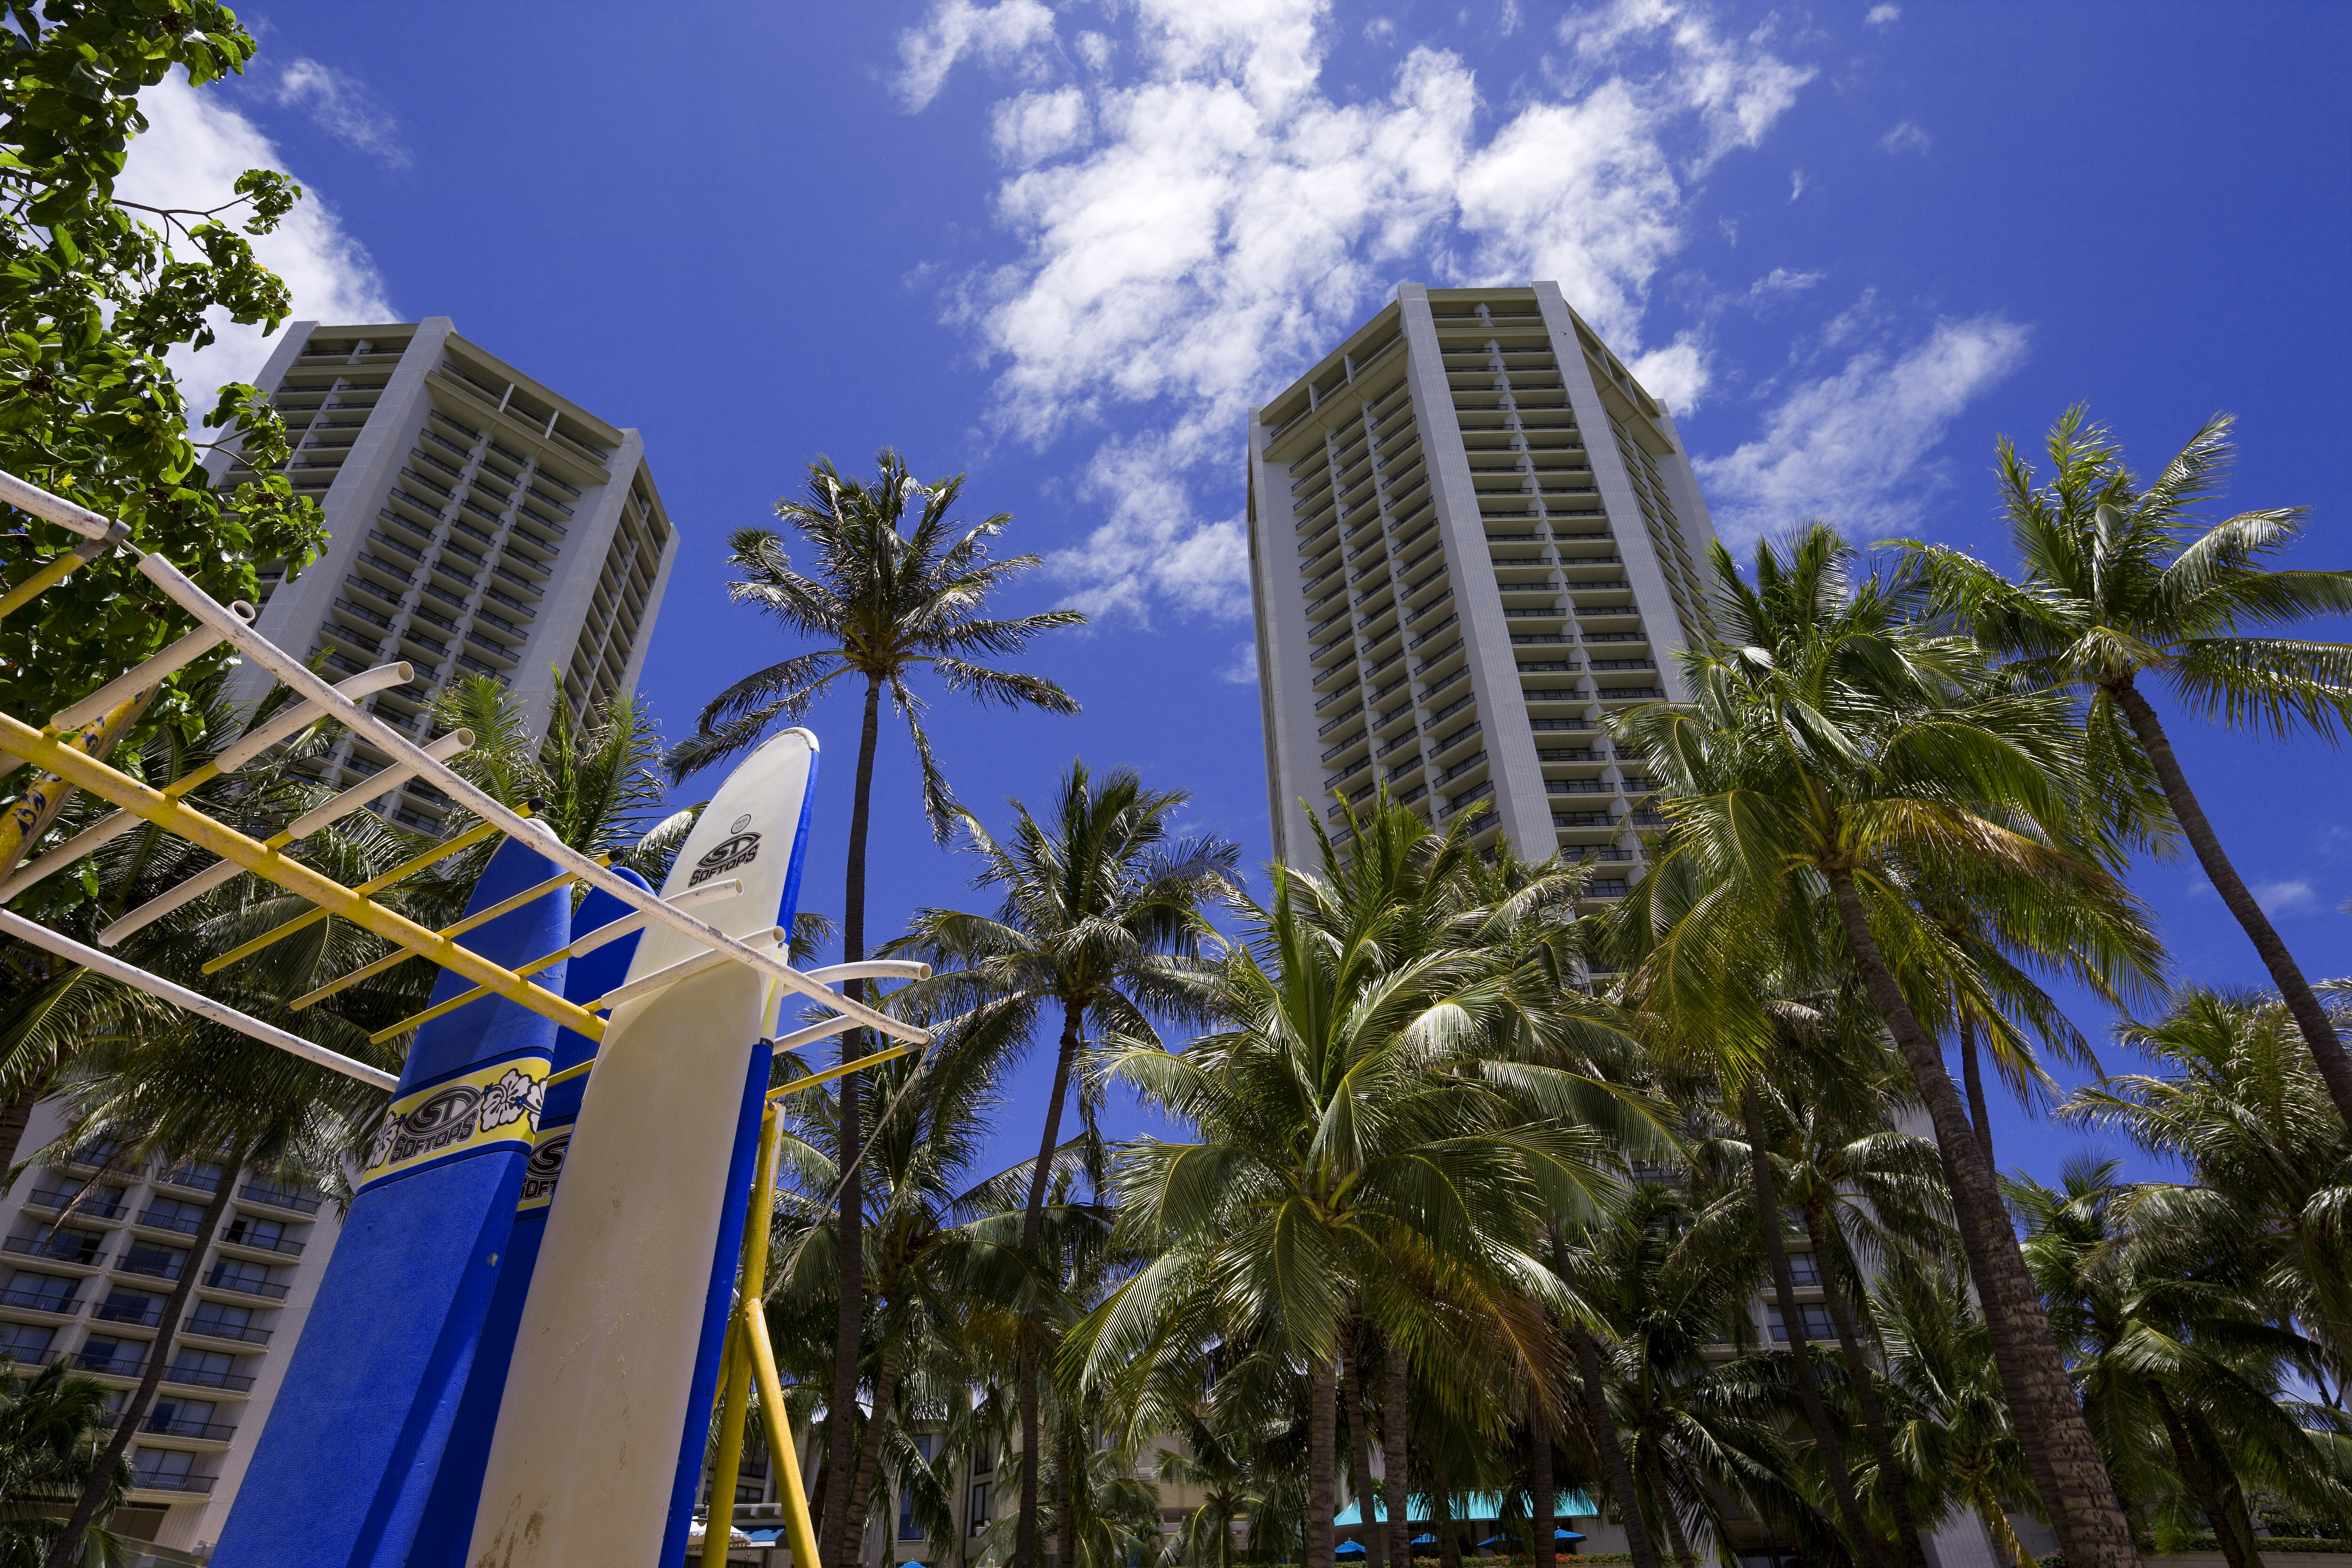 Foto, materieel, vrij, landschap, schilderstuk, bevoorraden foto,Waikiki hotel, Strand, Surfboard, Blauwe lucht, Gebouw